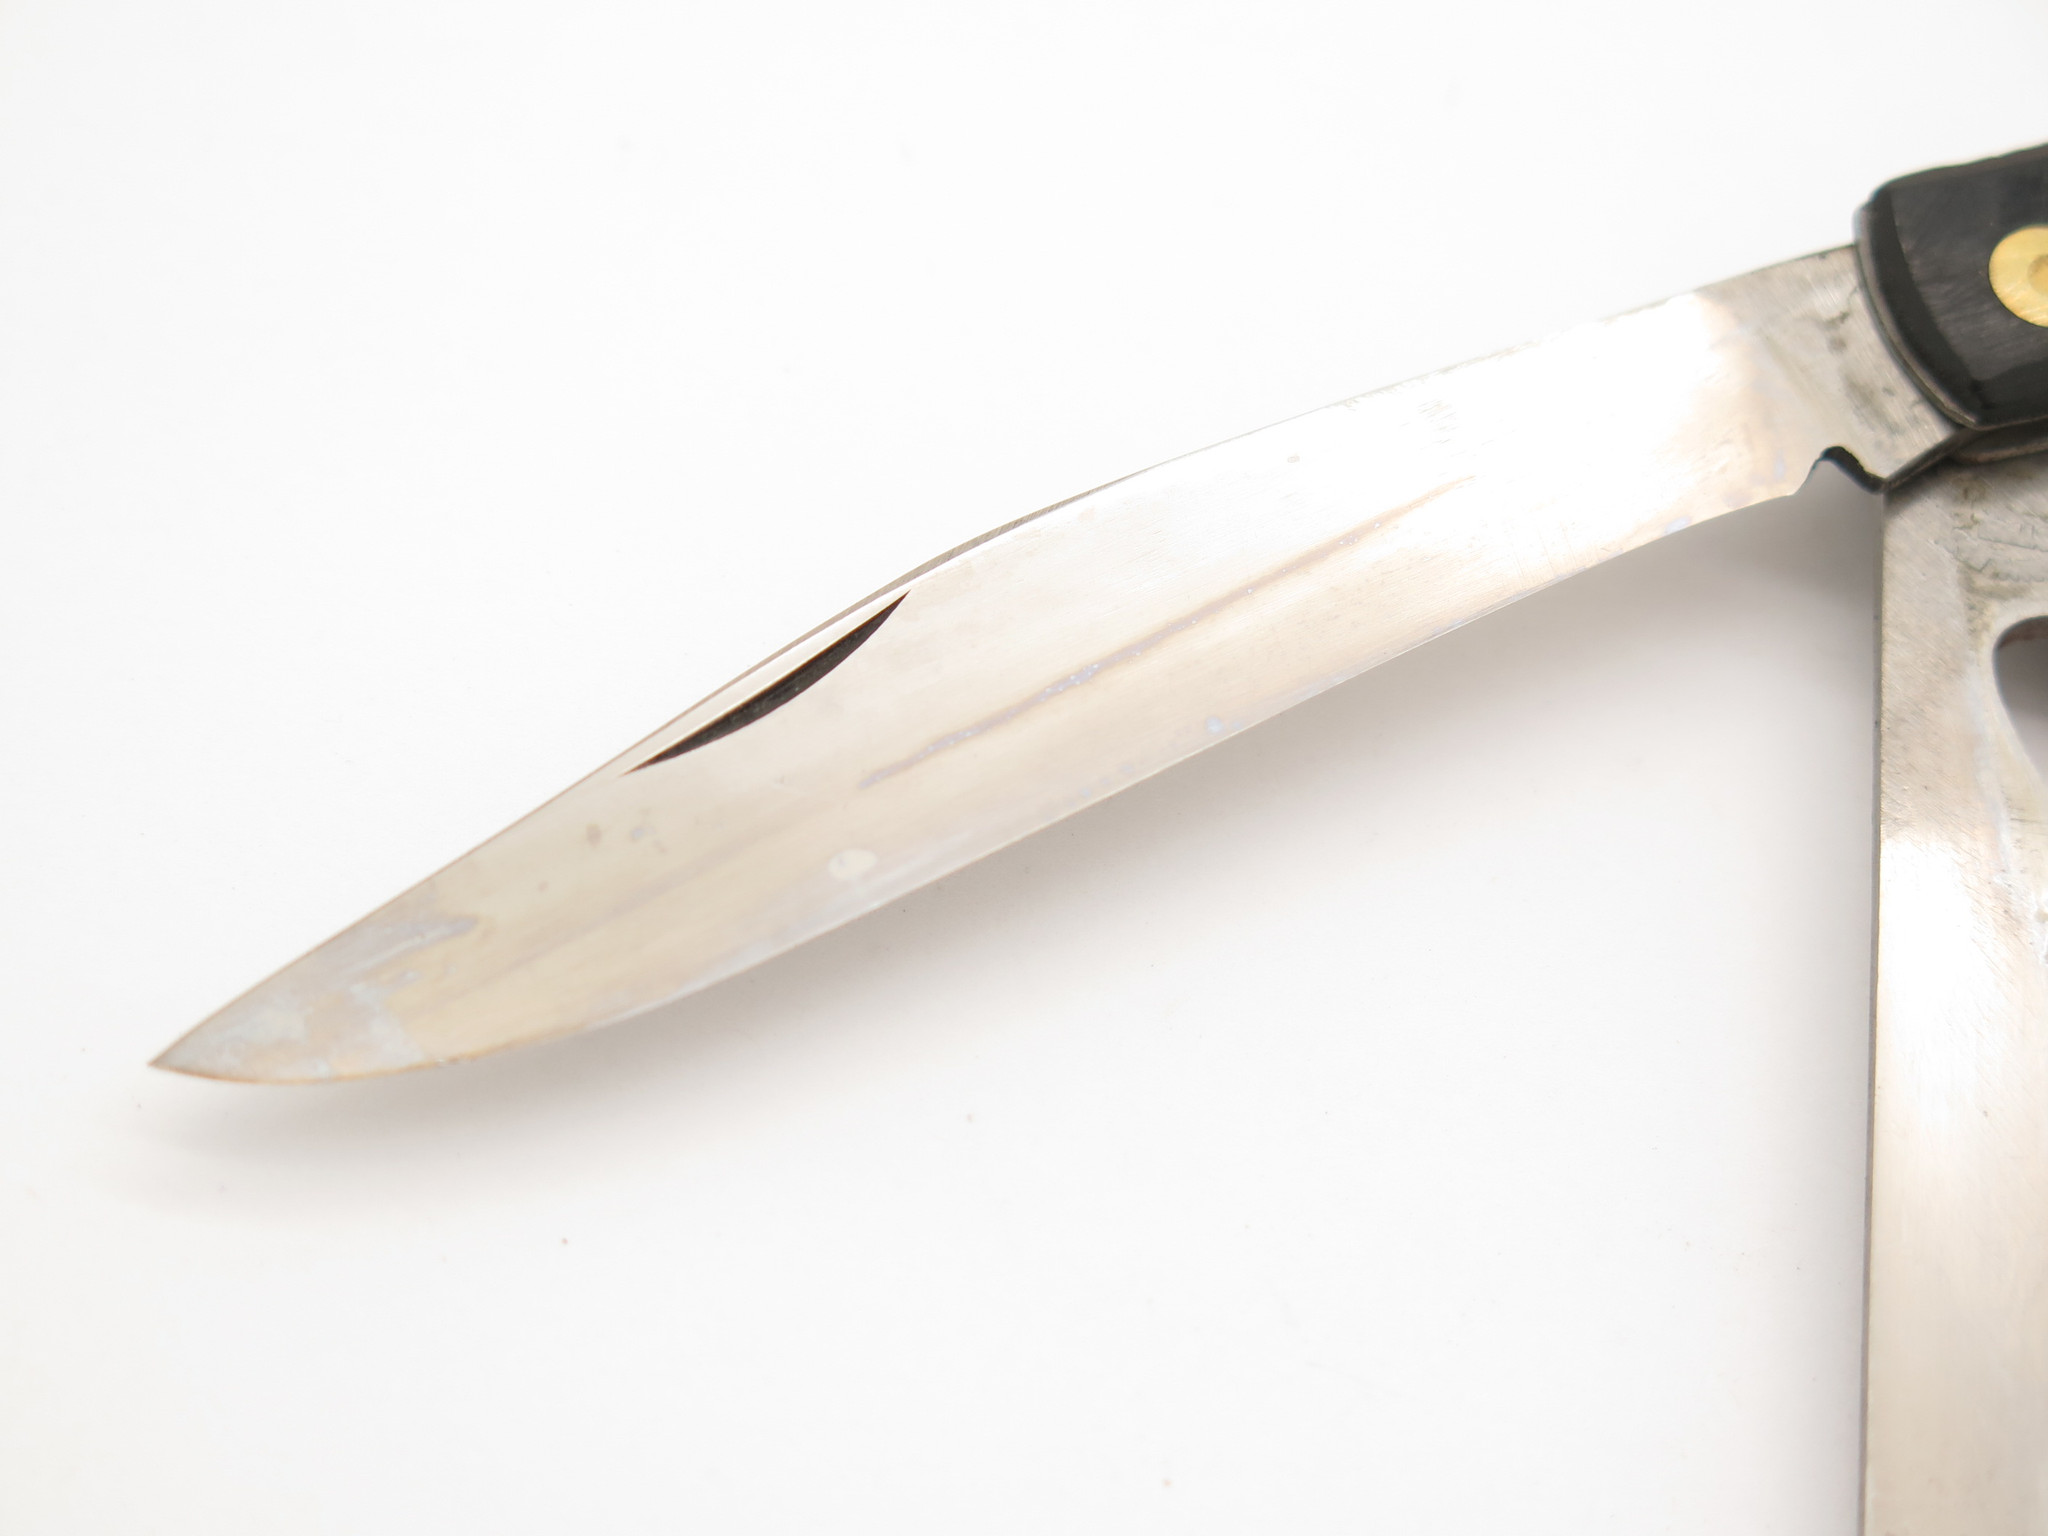 Vintage 1950s Seki Japan Folding Fishing Knife 3 Blade Gaff Clip